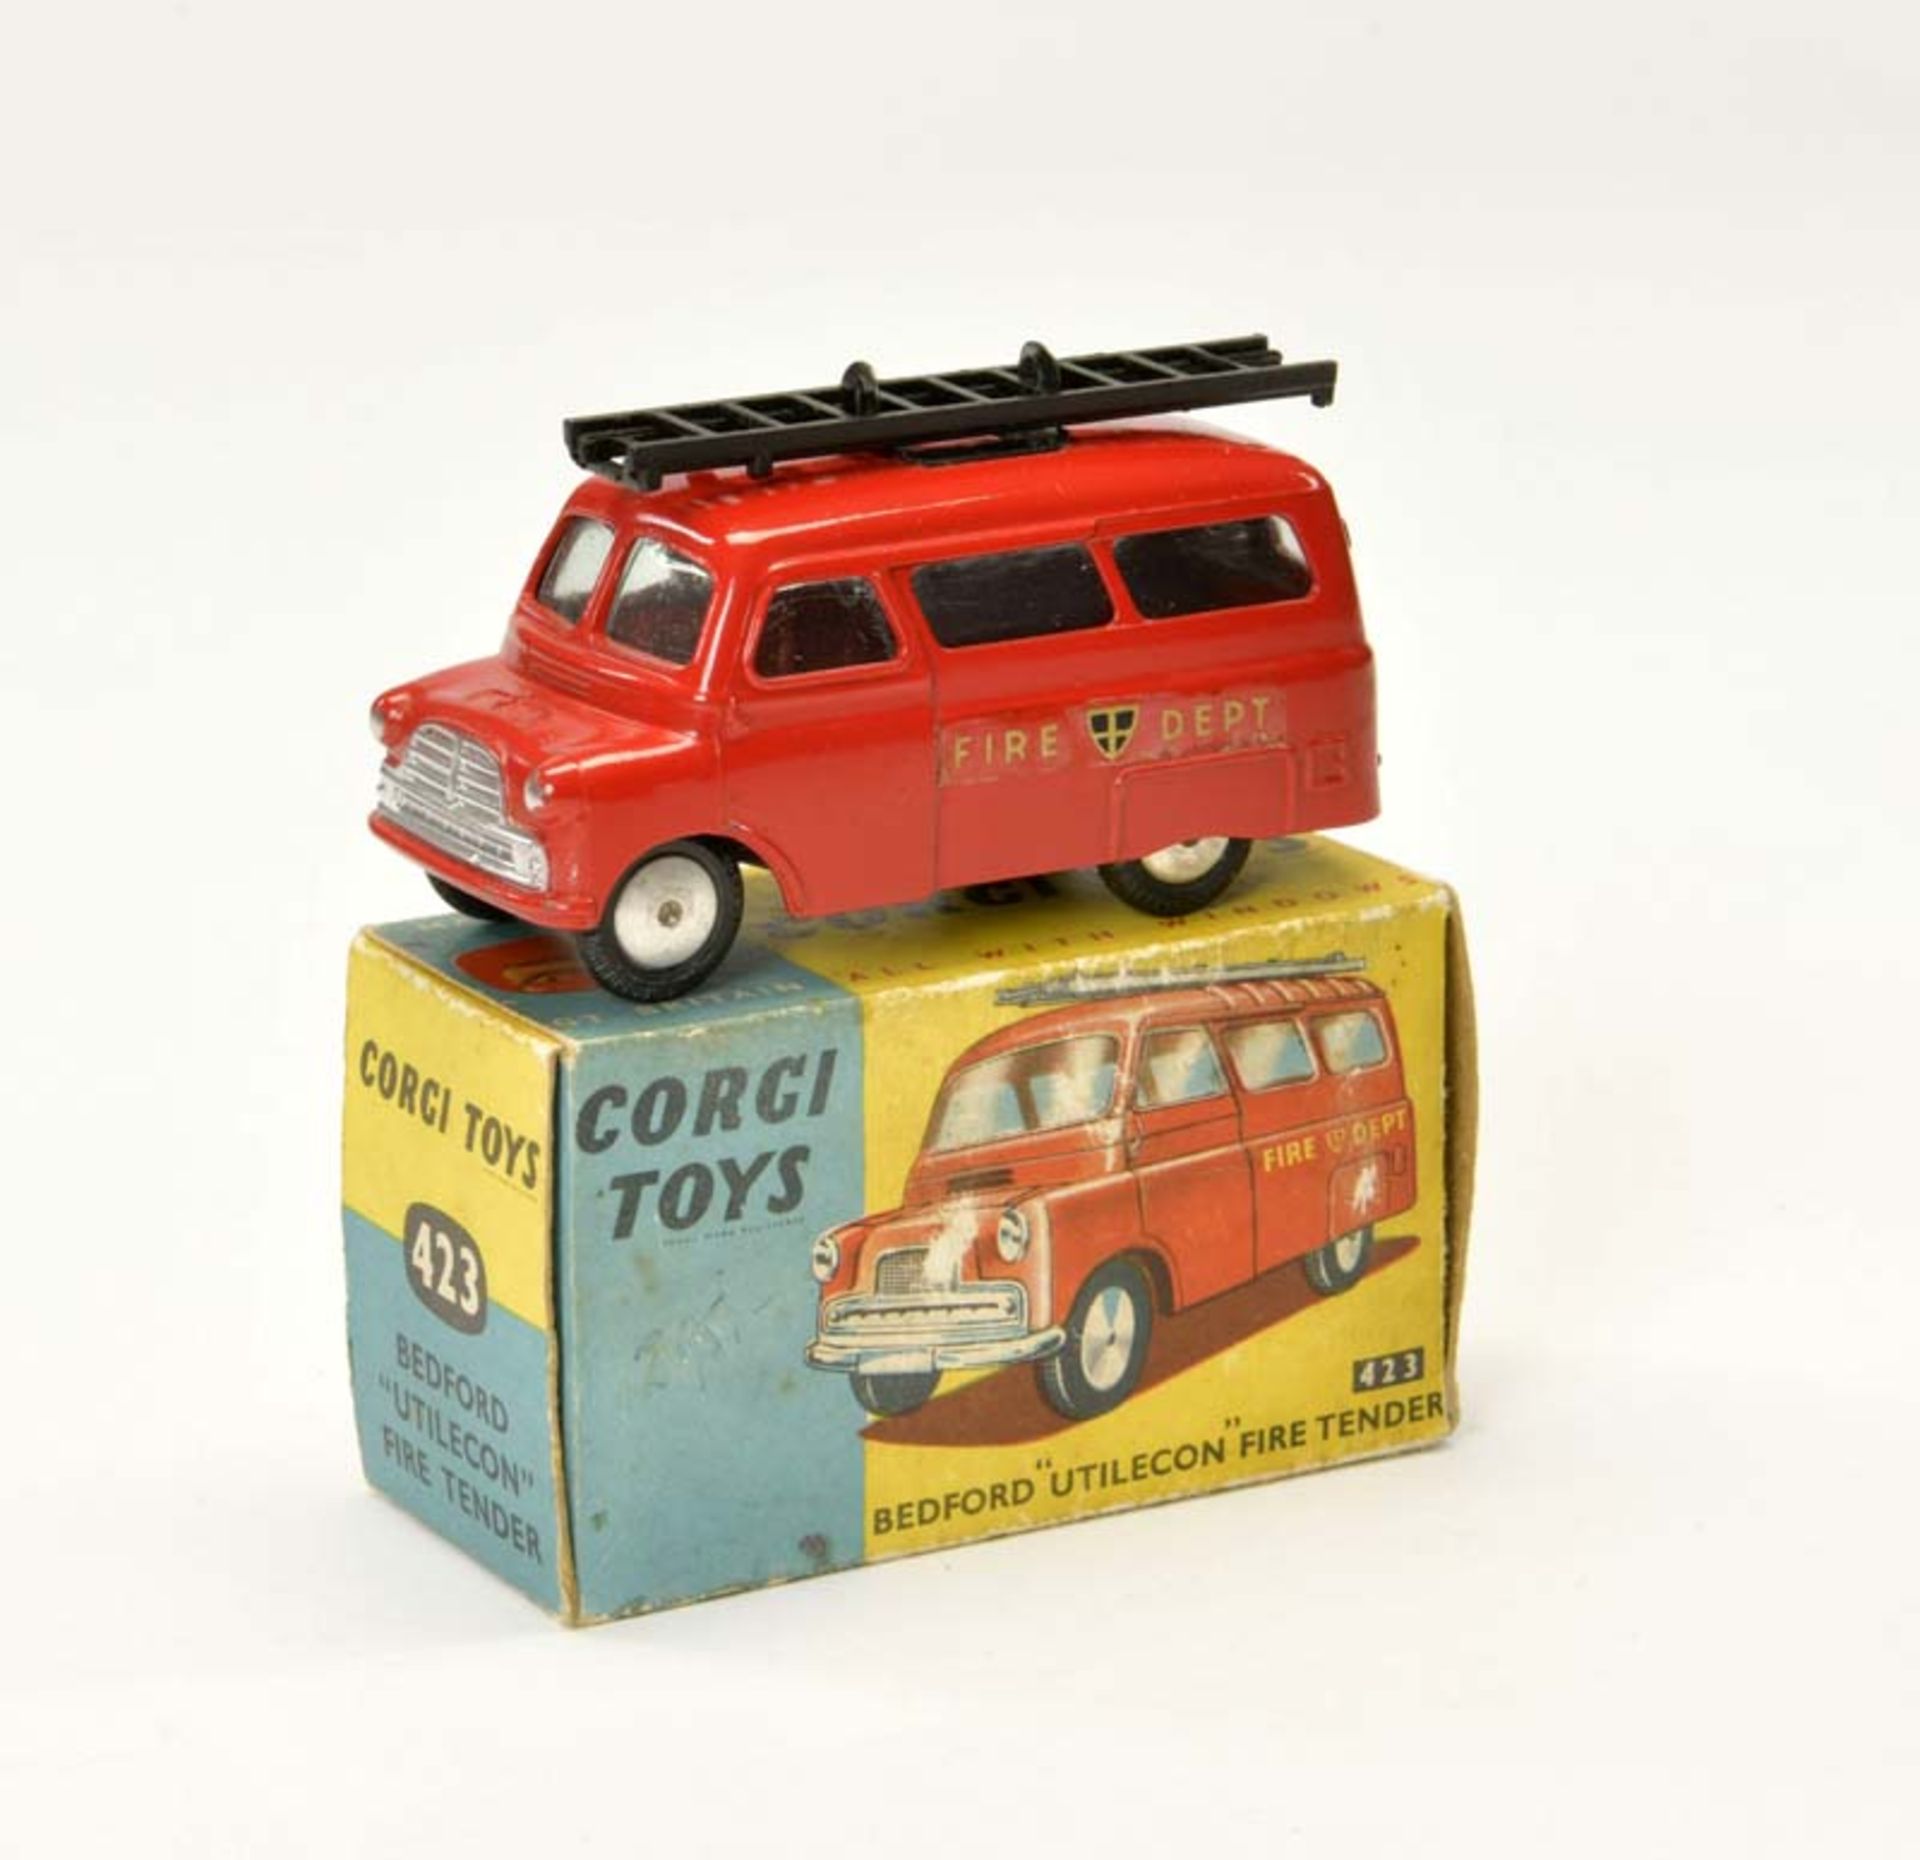 Corgi Toys, Bedford "Utilecon" Fire Tender 423, Great Britain, 1:43, diecast, box C 2+, C 1